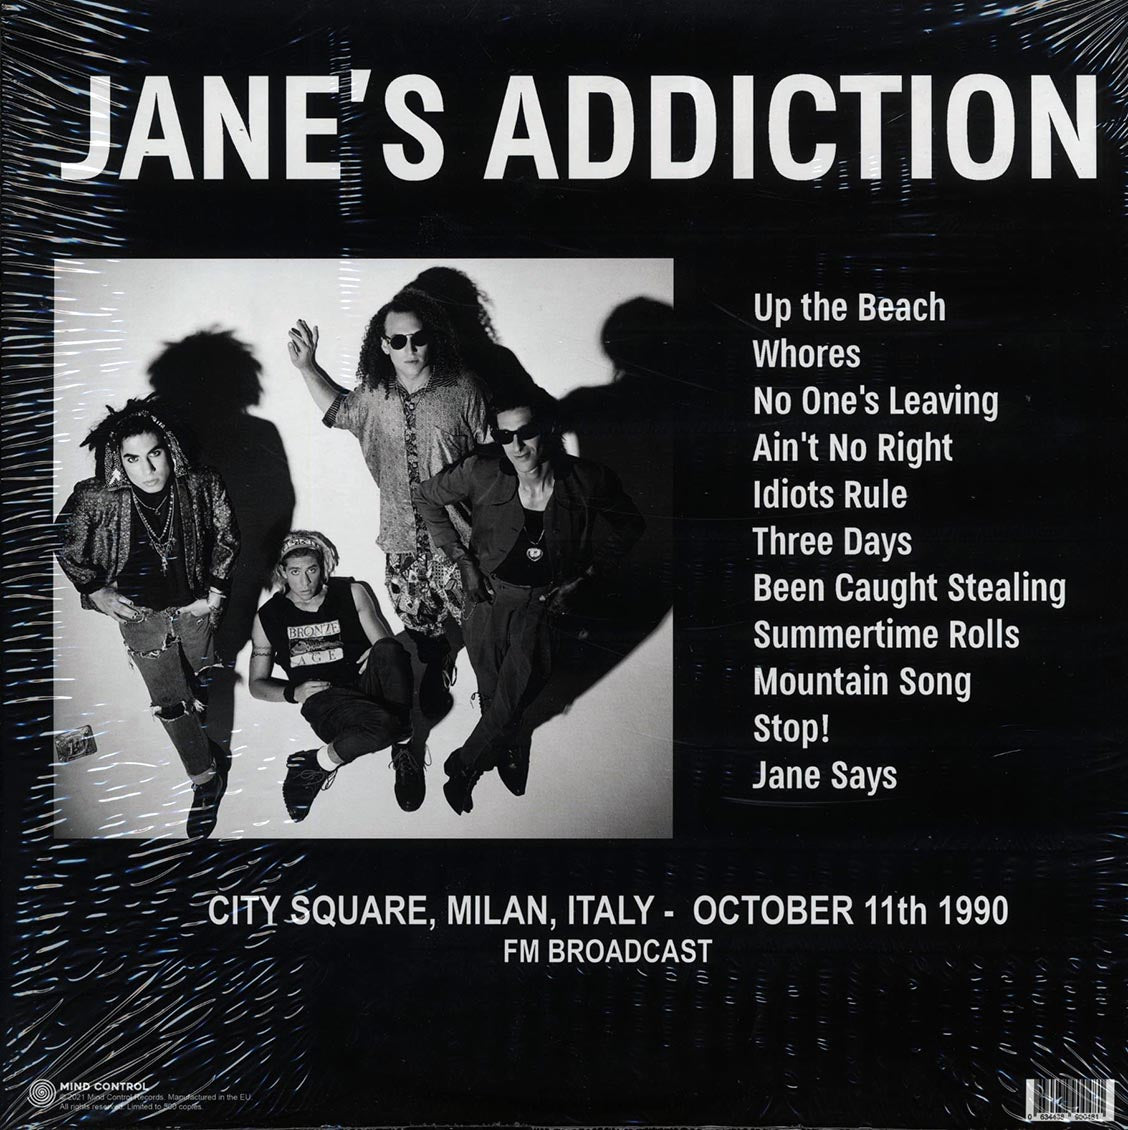 Jane's Addiction - City Square, Milan, Italy, October 11th 1990 FM Broadcast (ltd. 500 copies made) - Vinyl LP, LP